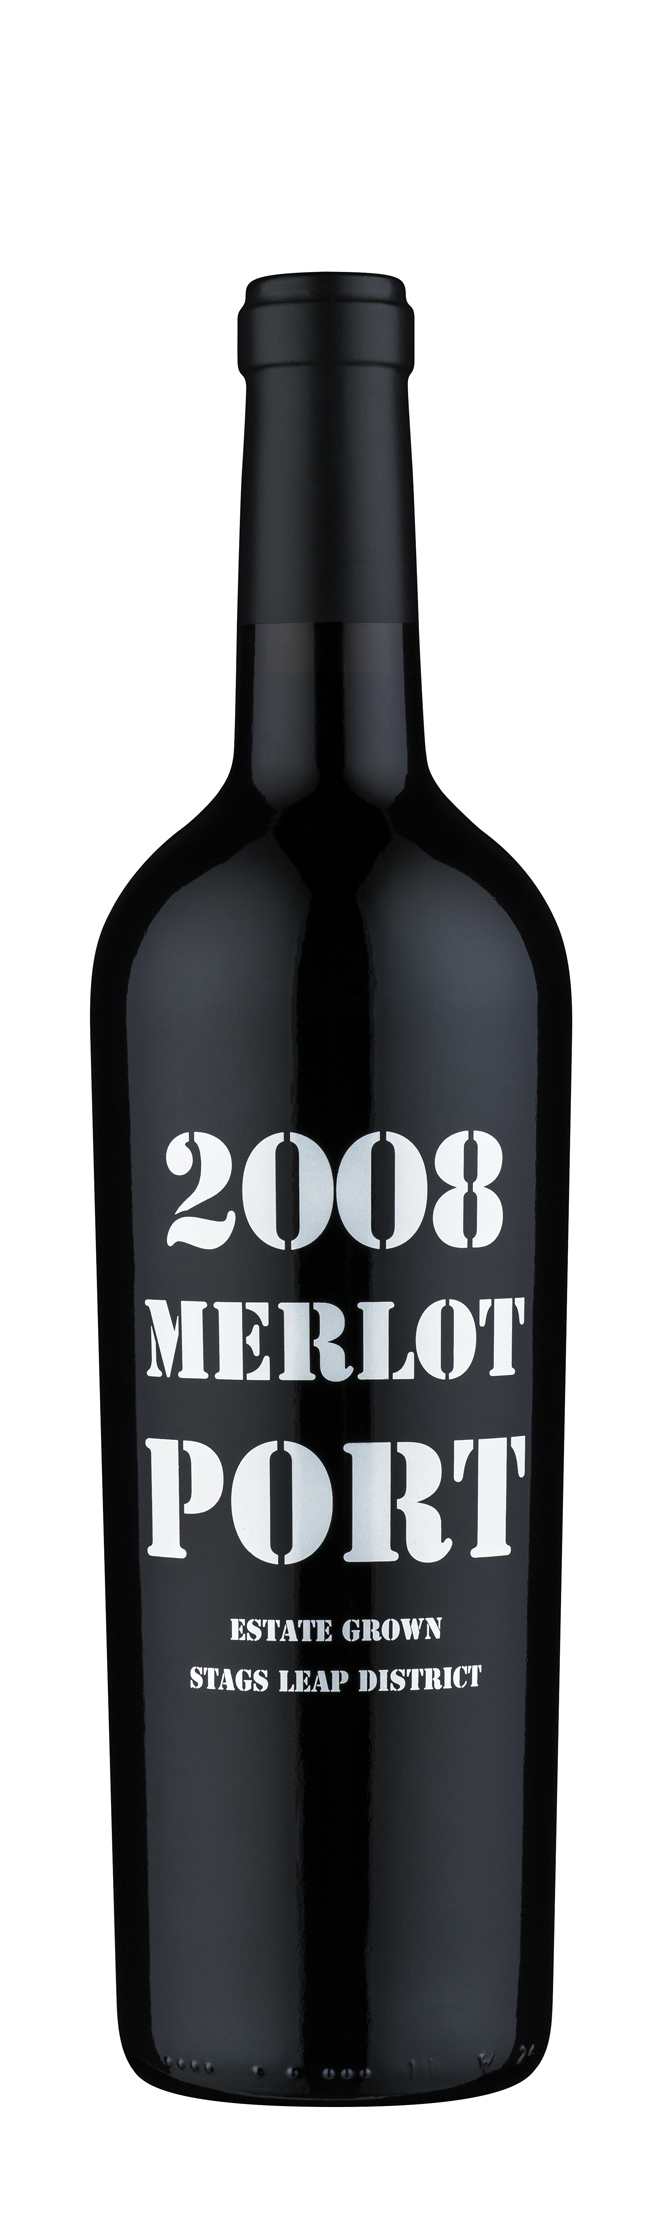 Product Image for 2008 Estate Merlot Port, SLD